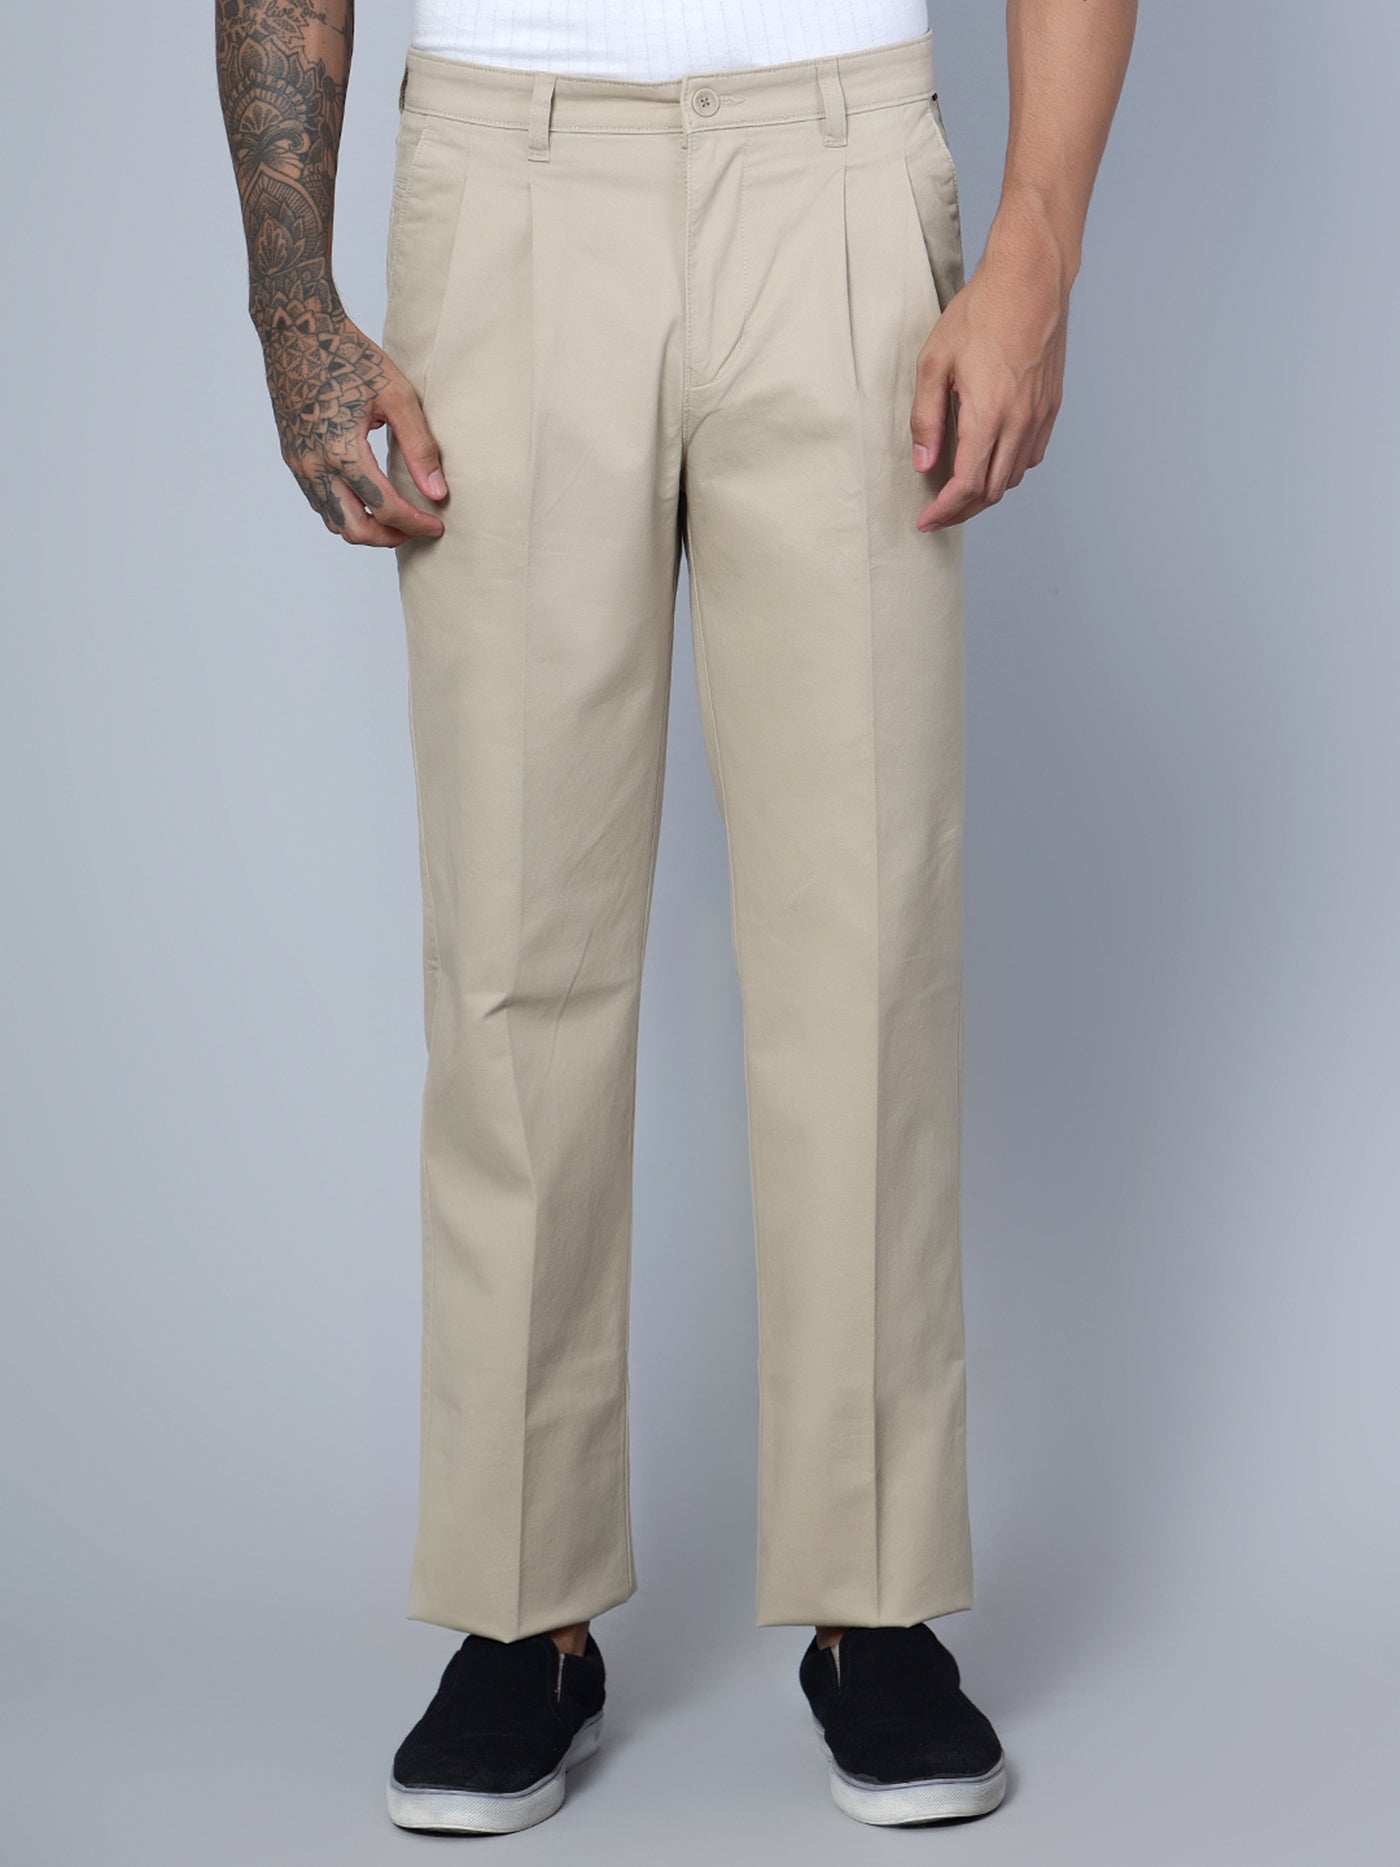 Buy ColorPlus Trousers online  Men  214 products  FASHIOLAin